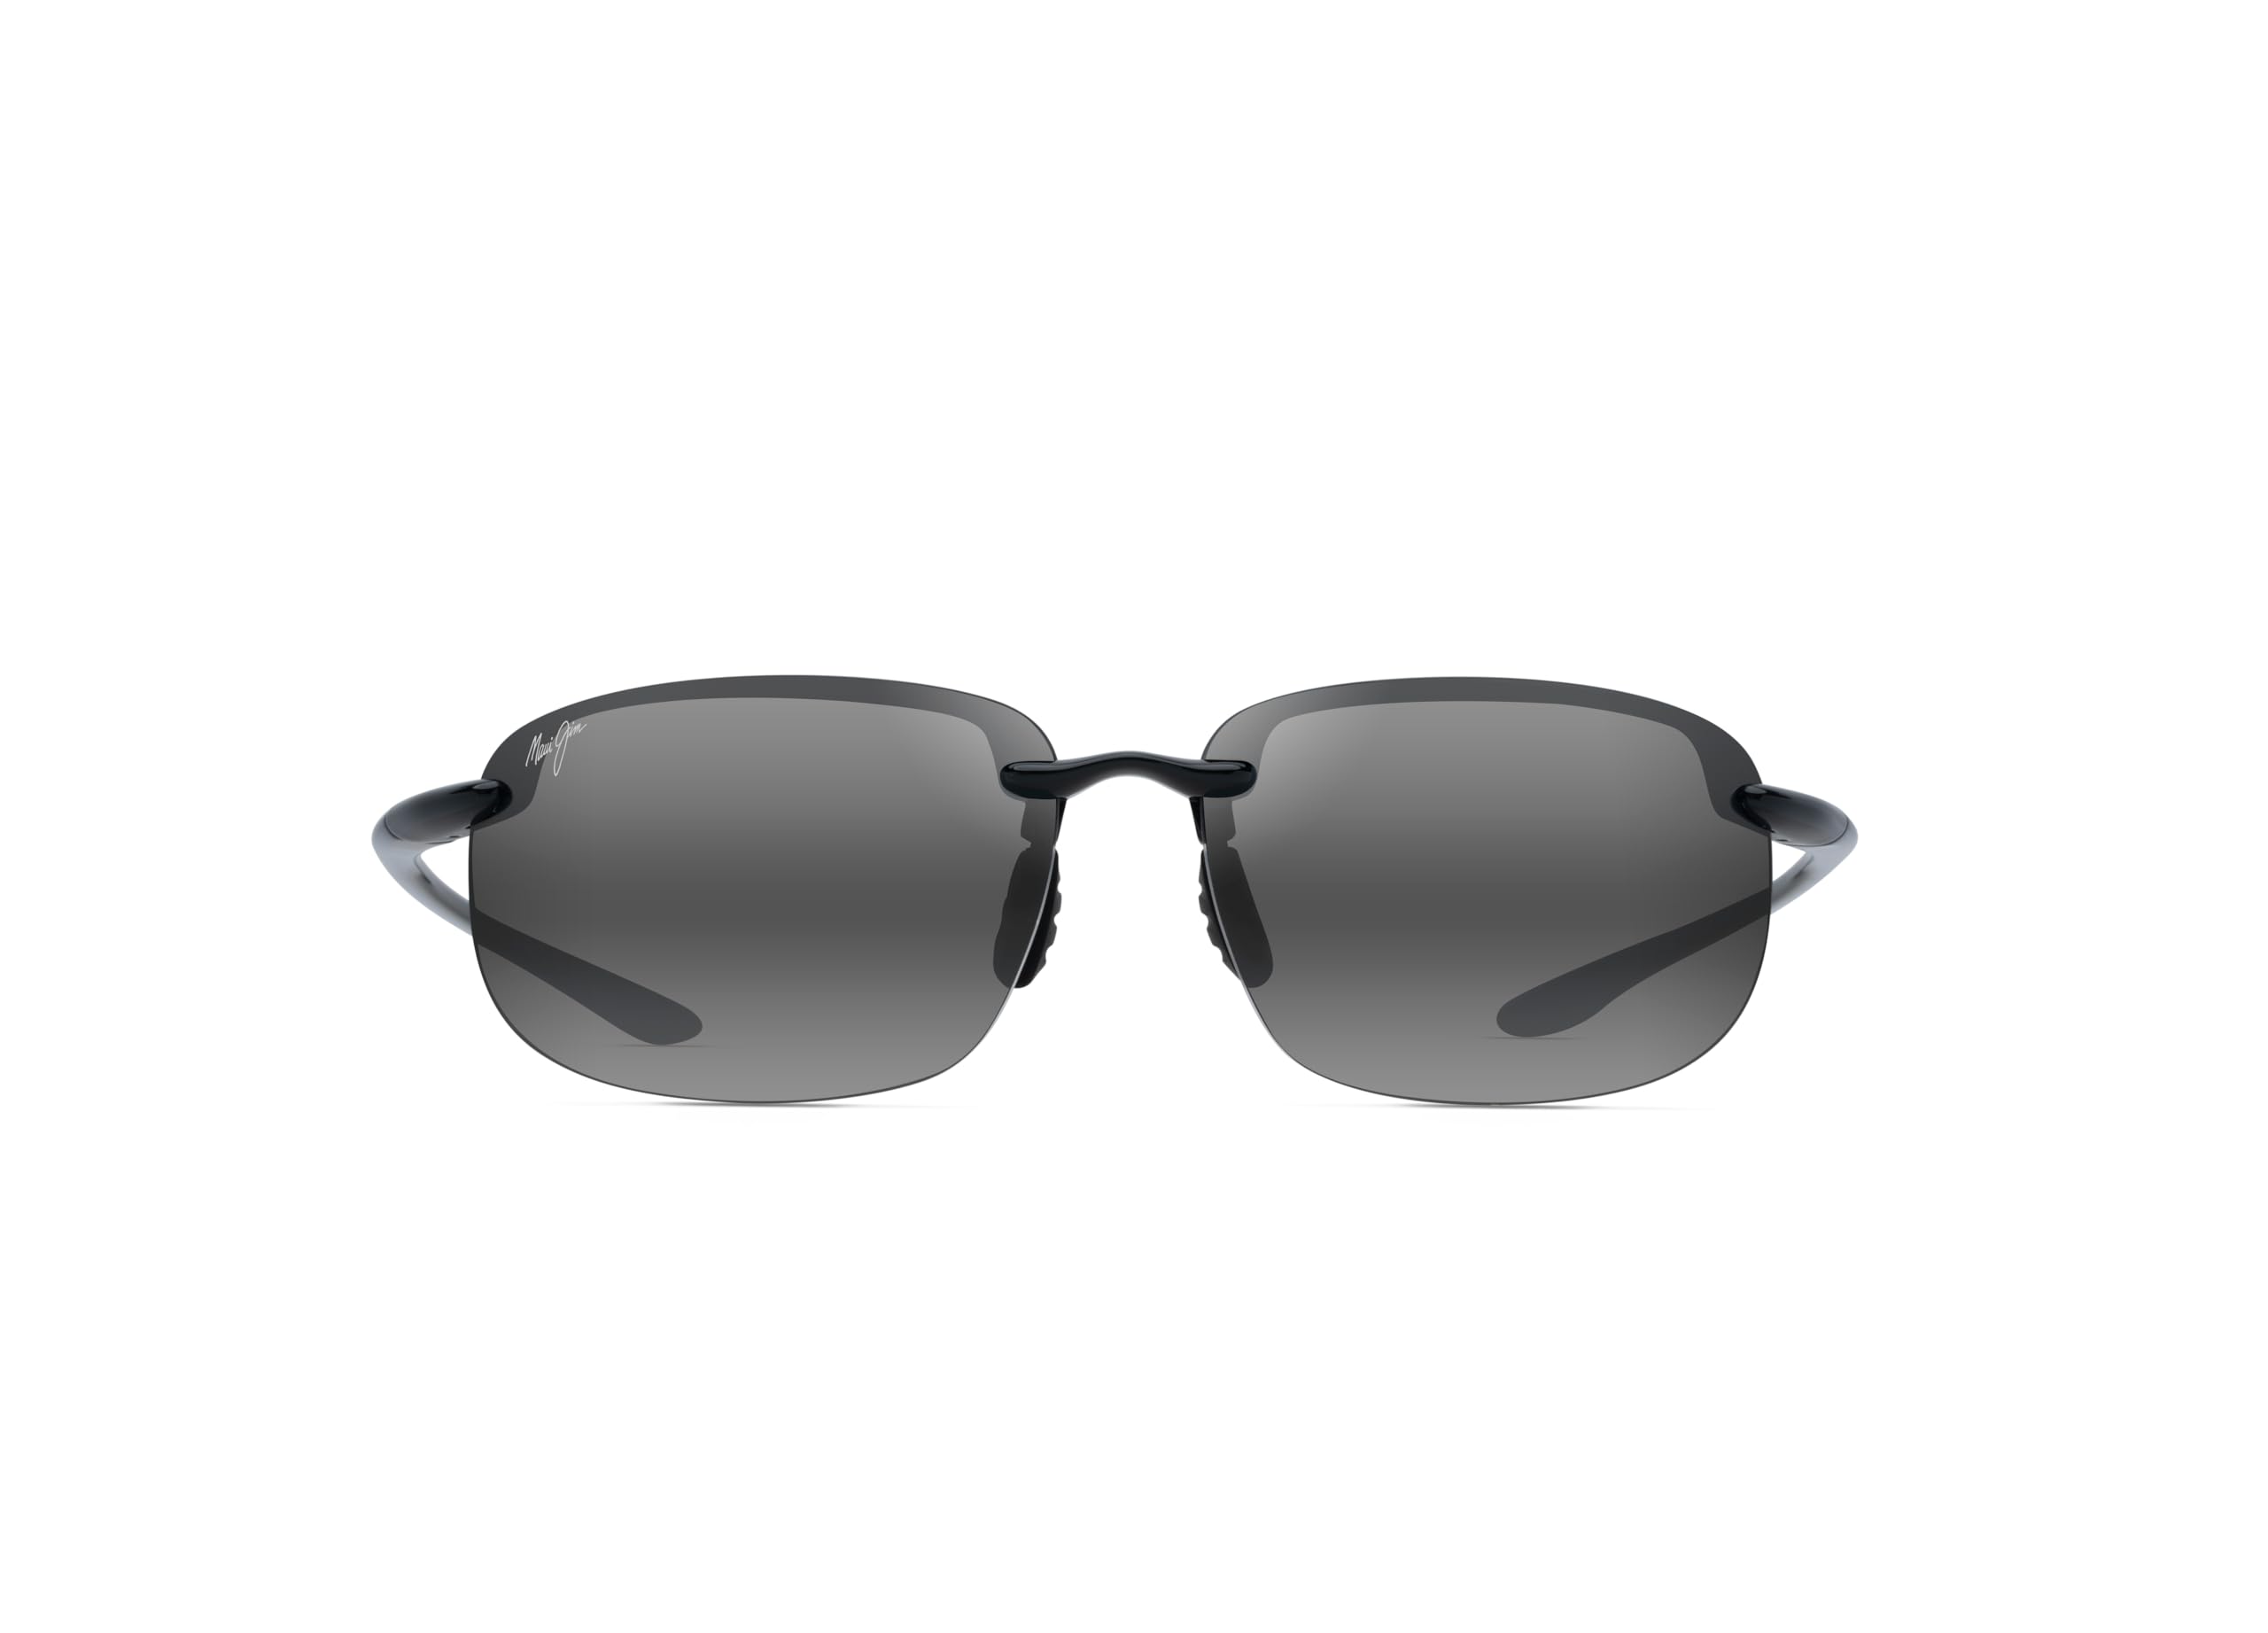 Maui Jim Hookipa XLarge Oval Sunglasses